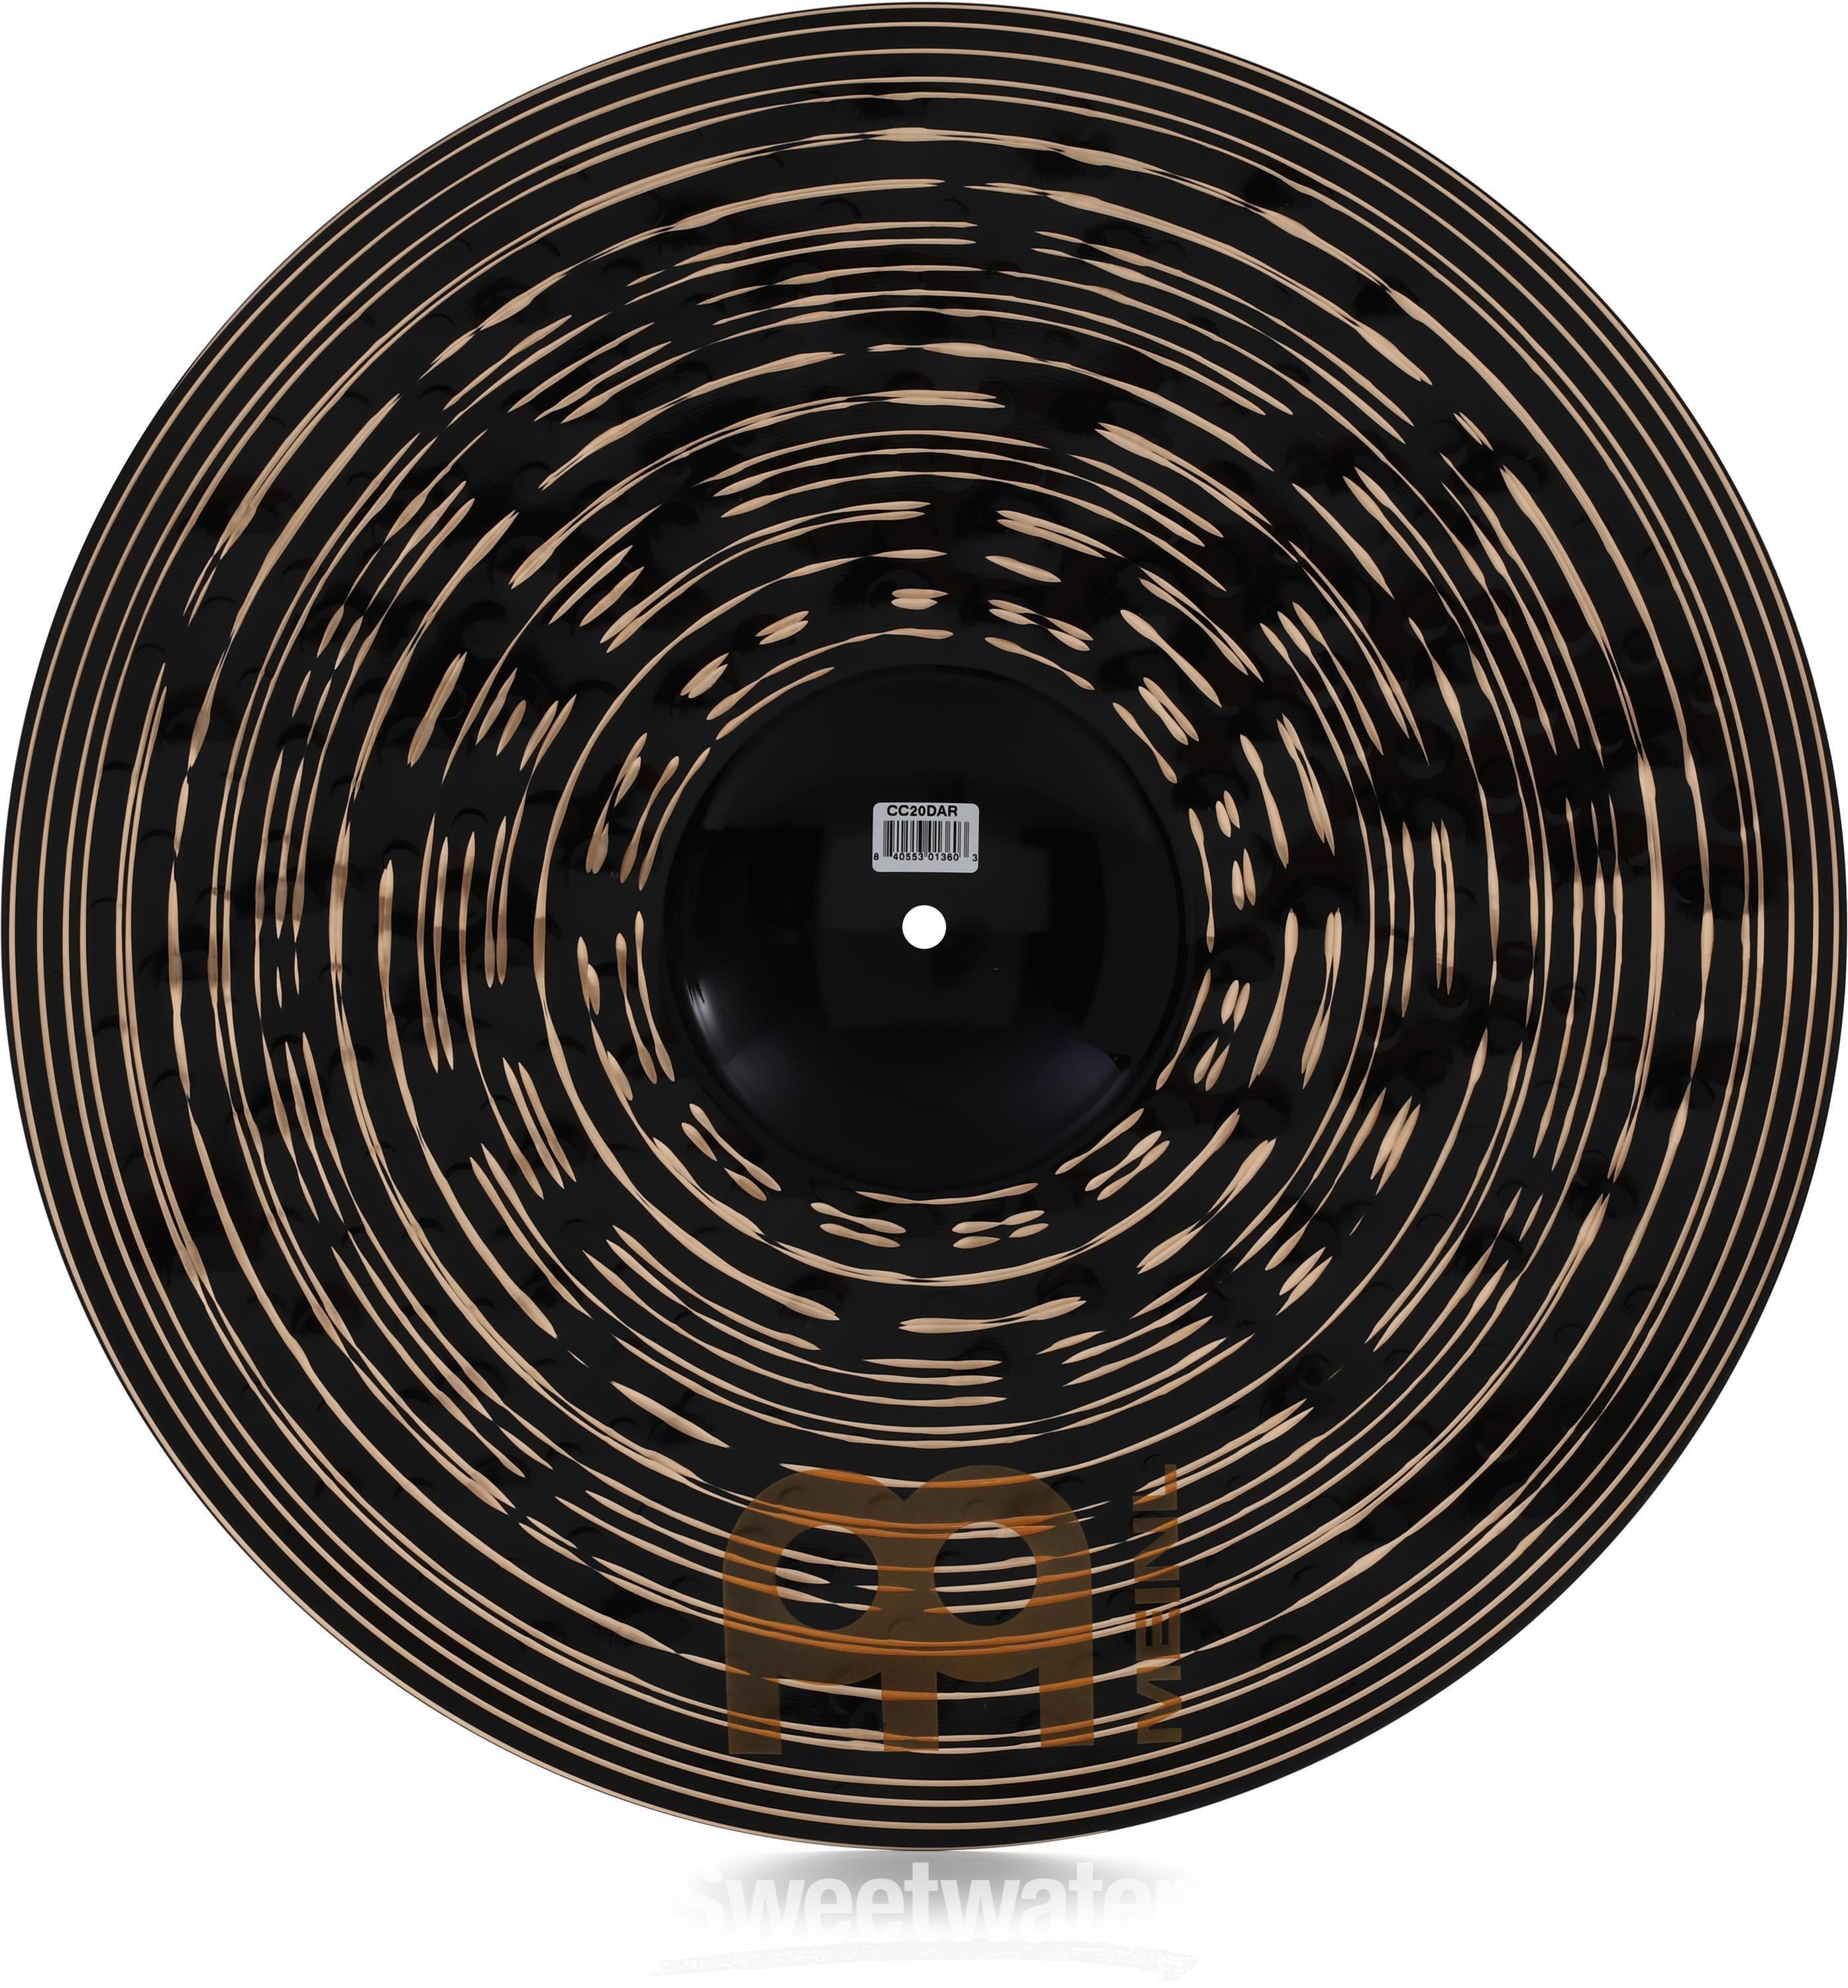 Meinl Cymbals 20 inch Classics Custom Dark Ride Cymbal | Sweetwater